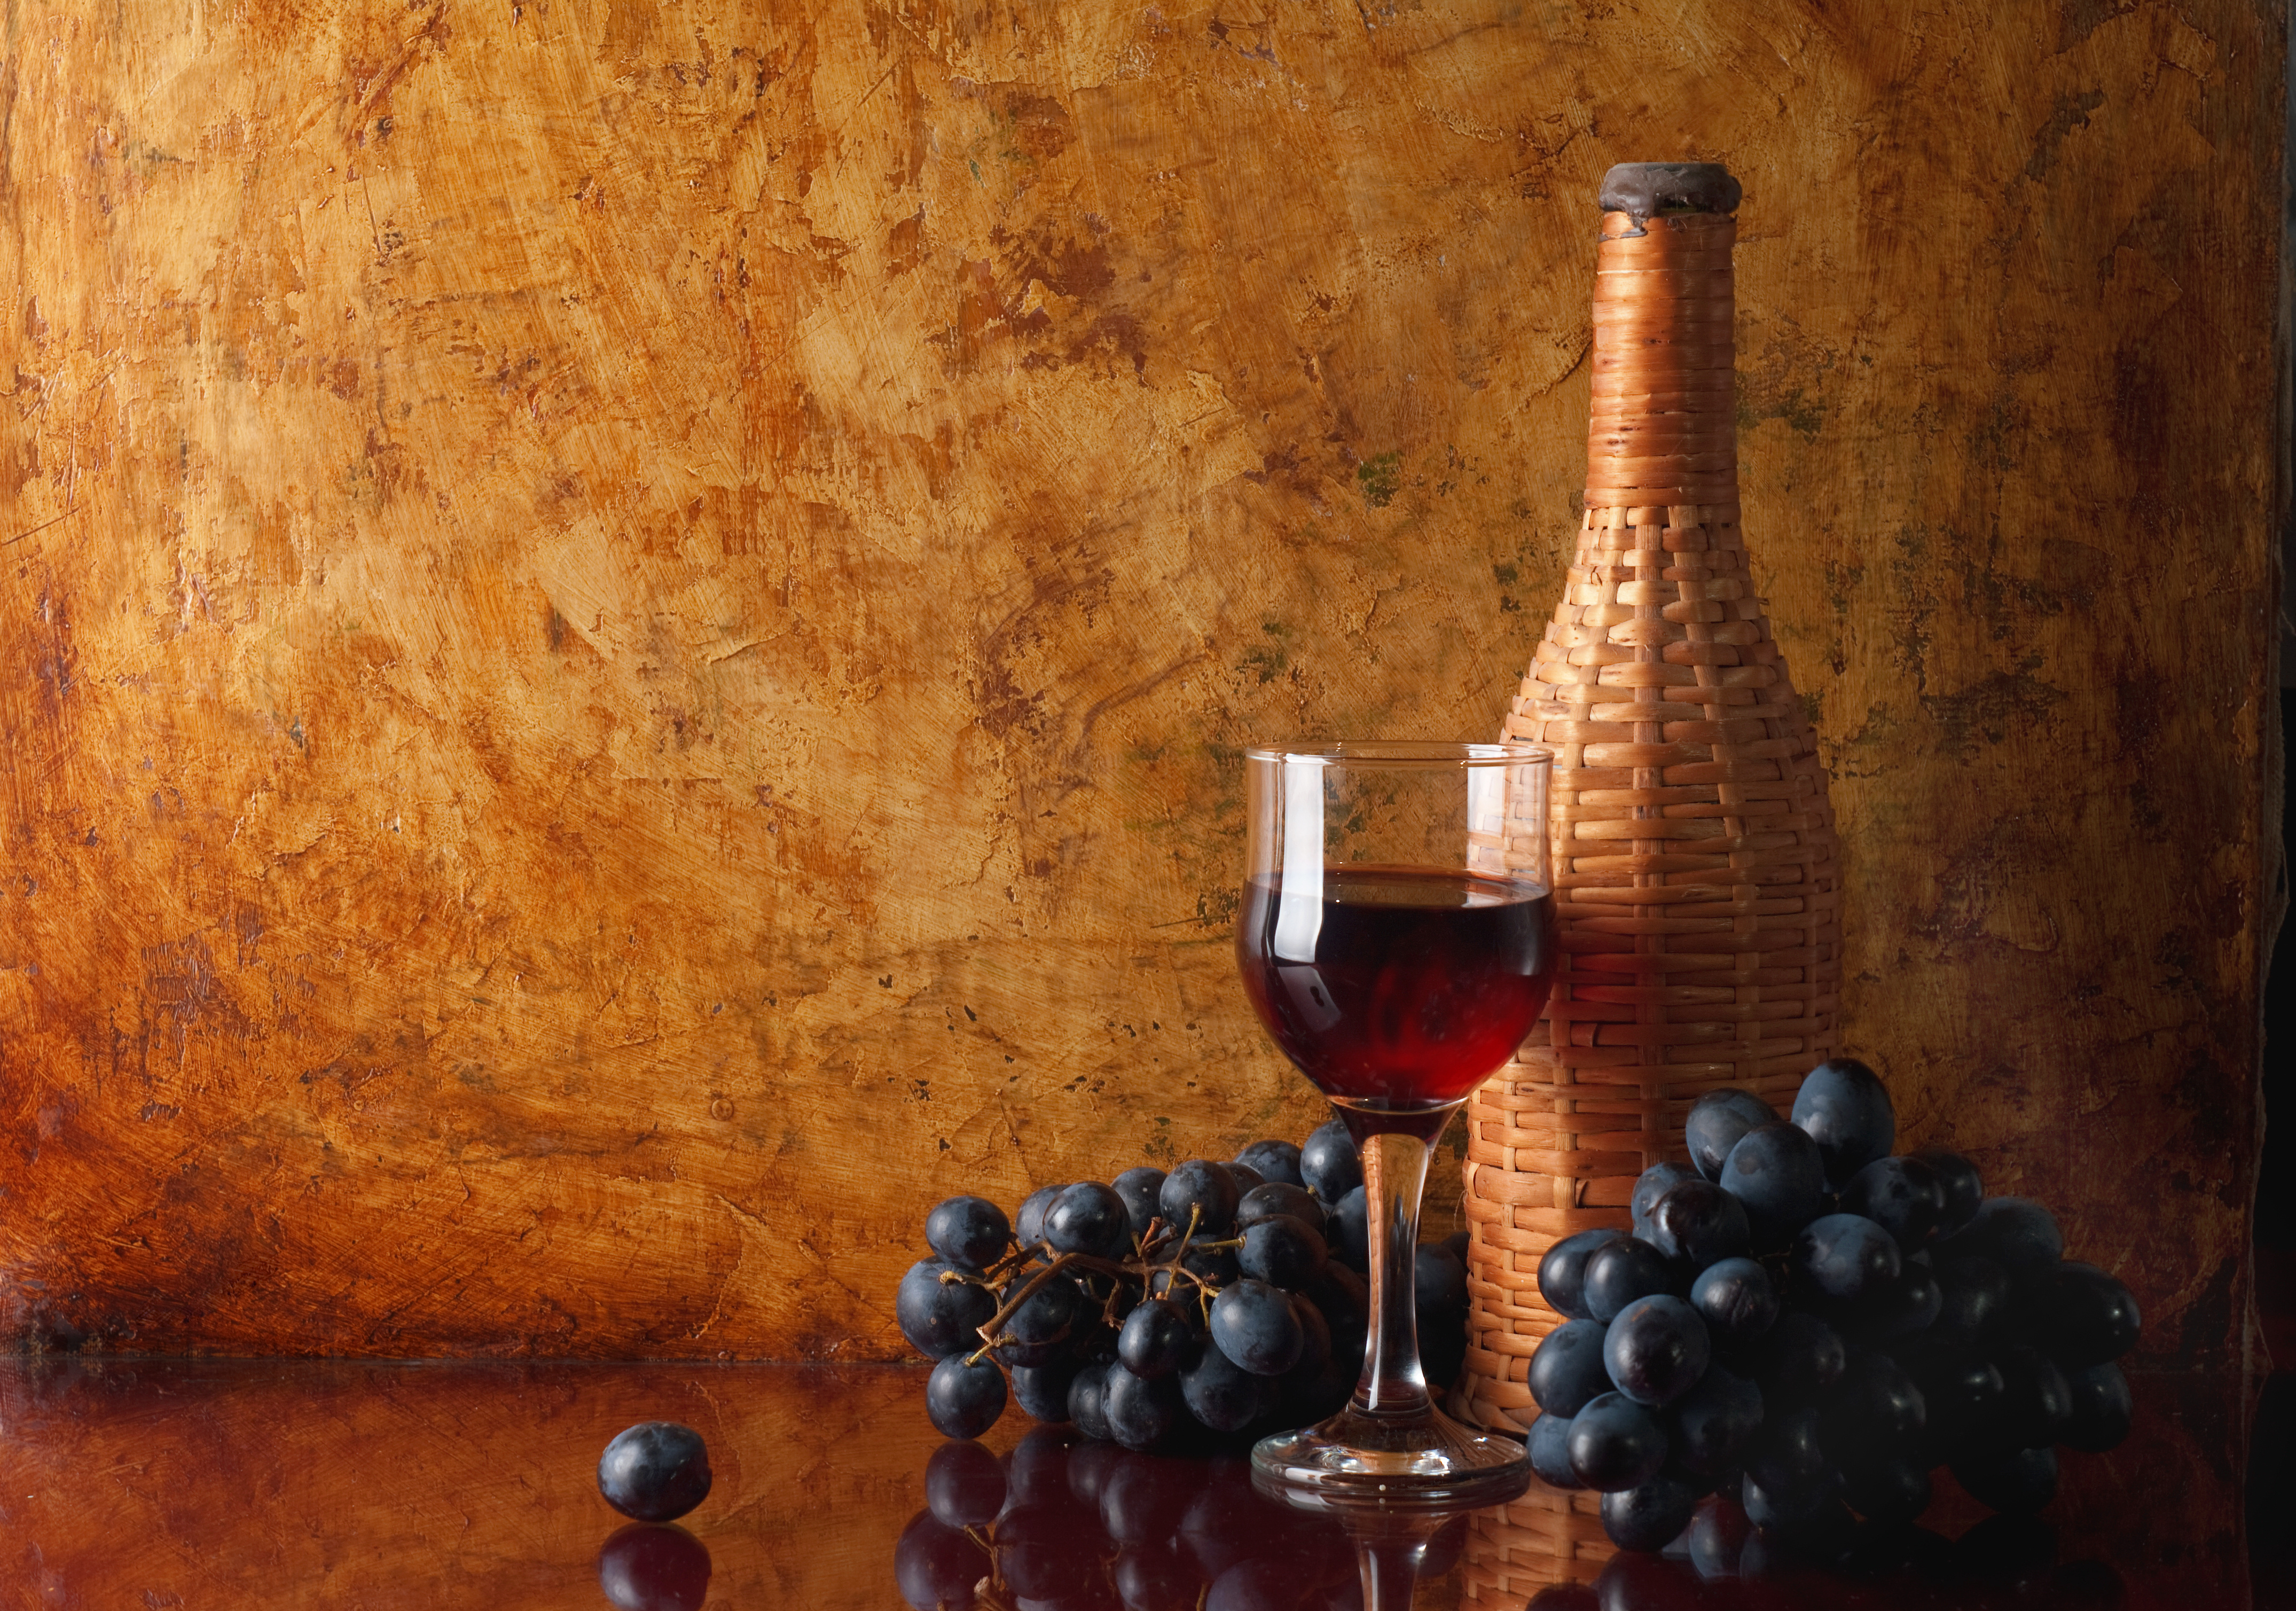  verre bouteille vin raisins rouges Wallpaper   ForWallpapercom